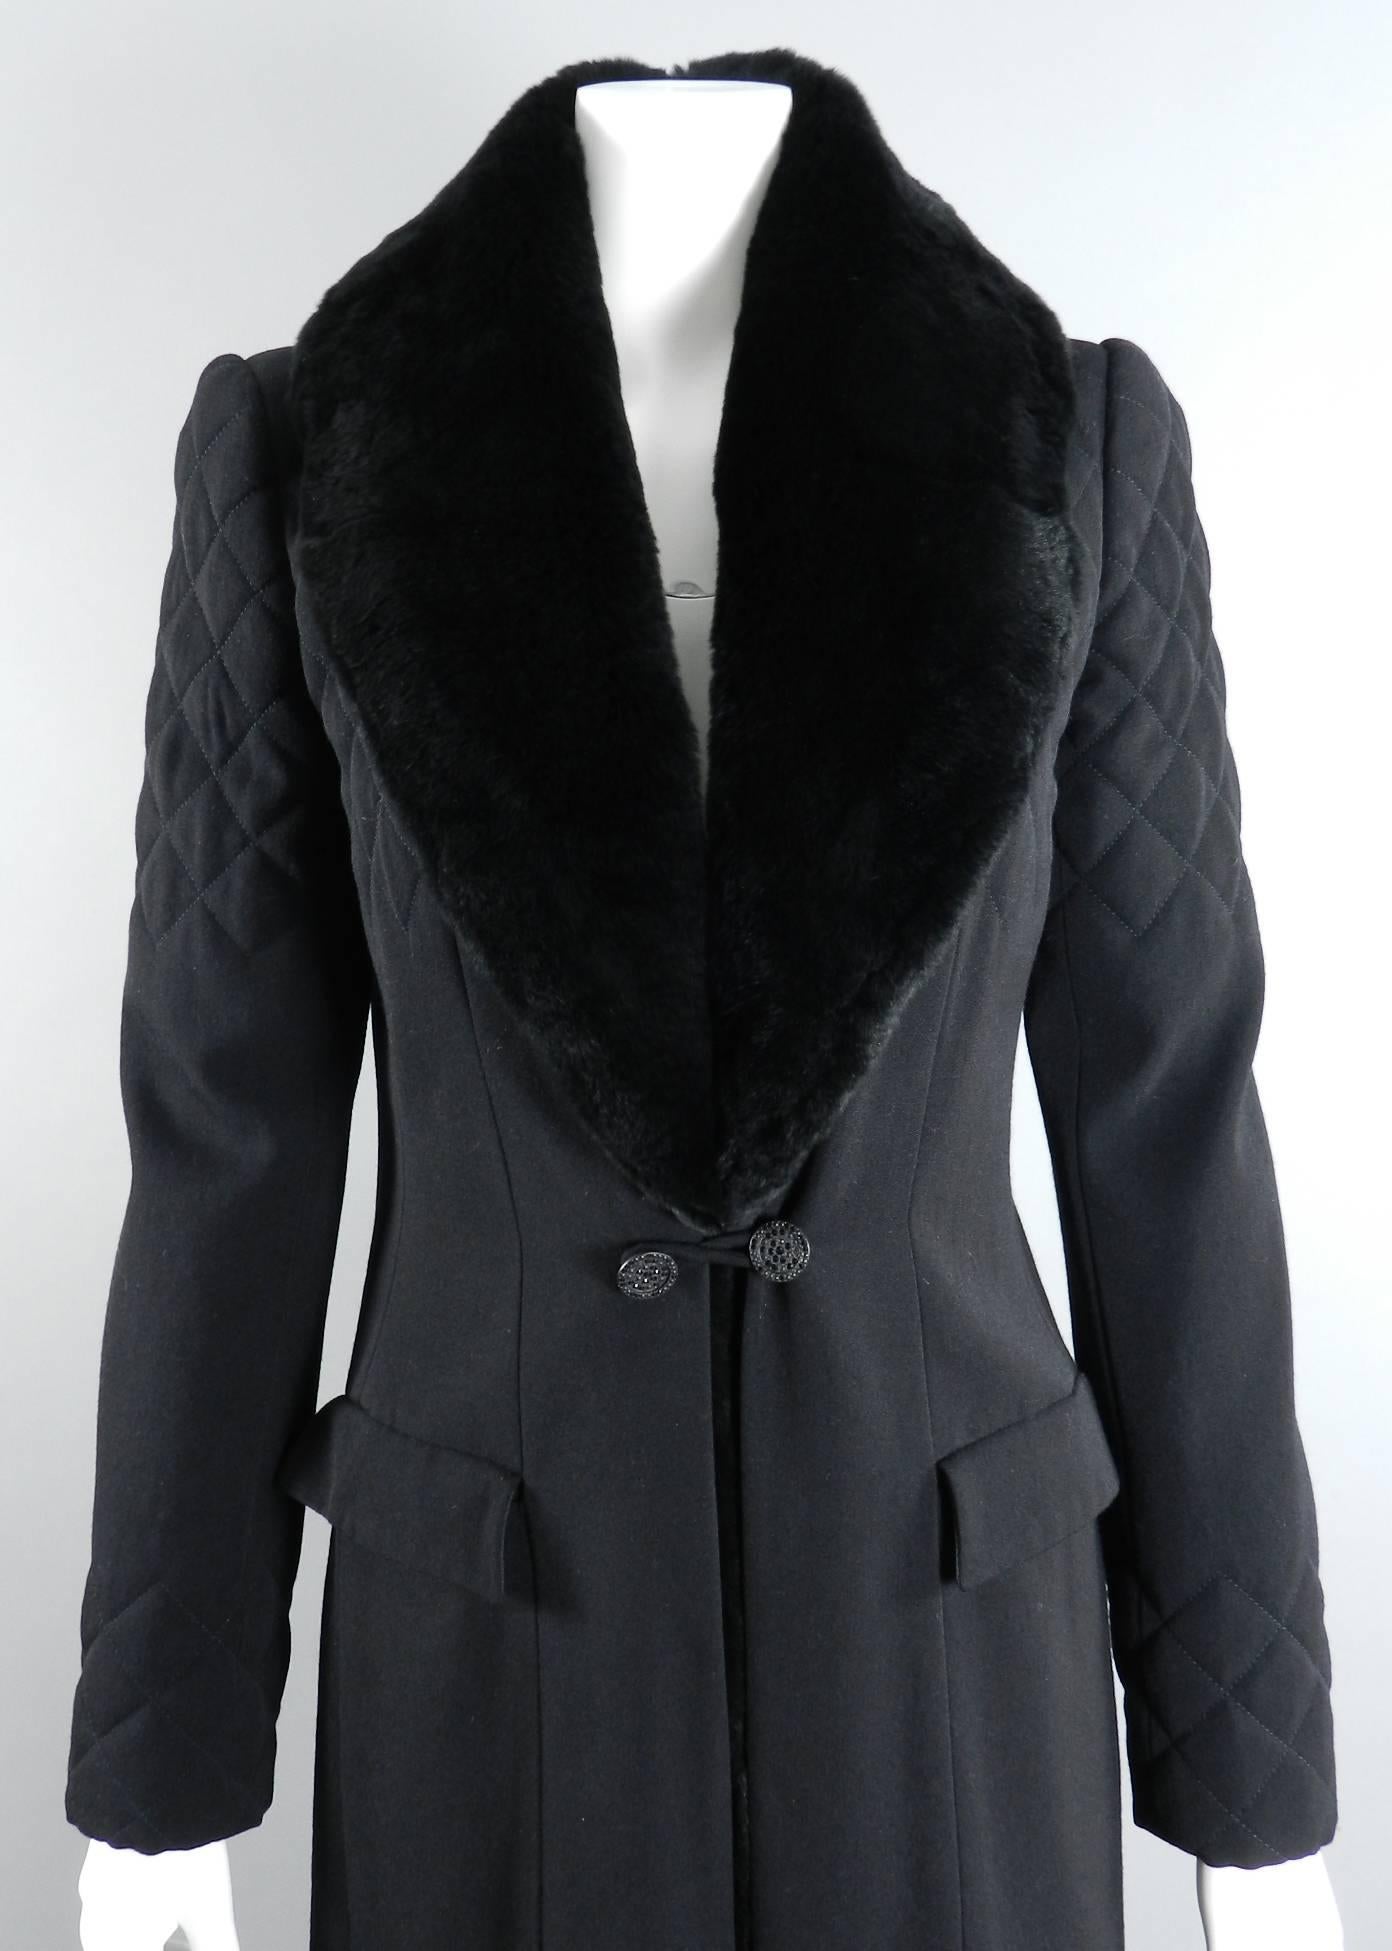 Chanel Long Black Wool Coat with Fur Trim 2